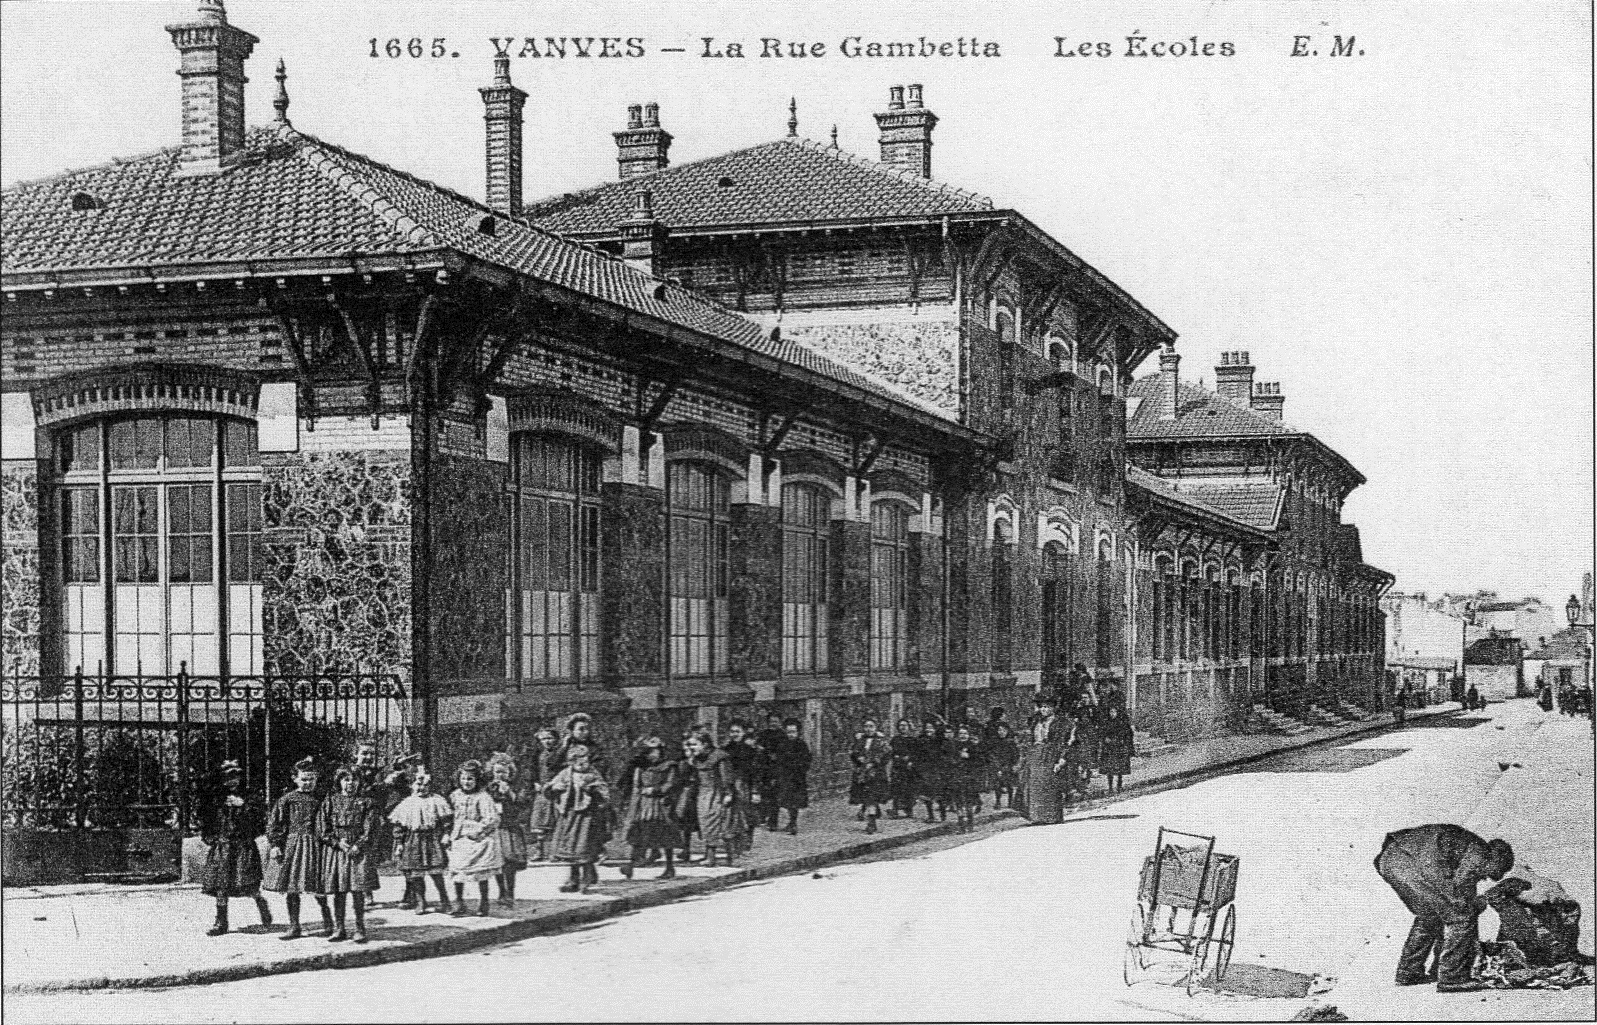 1905,Carte postale,Ecole Gambetta – Vanves,1 rue Gambetta,Vanves,France